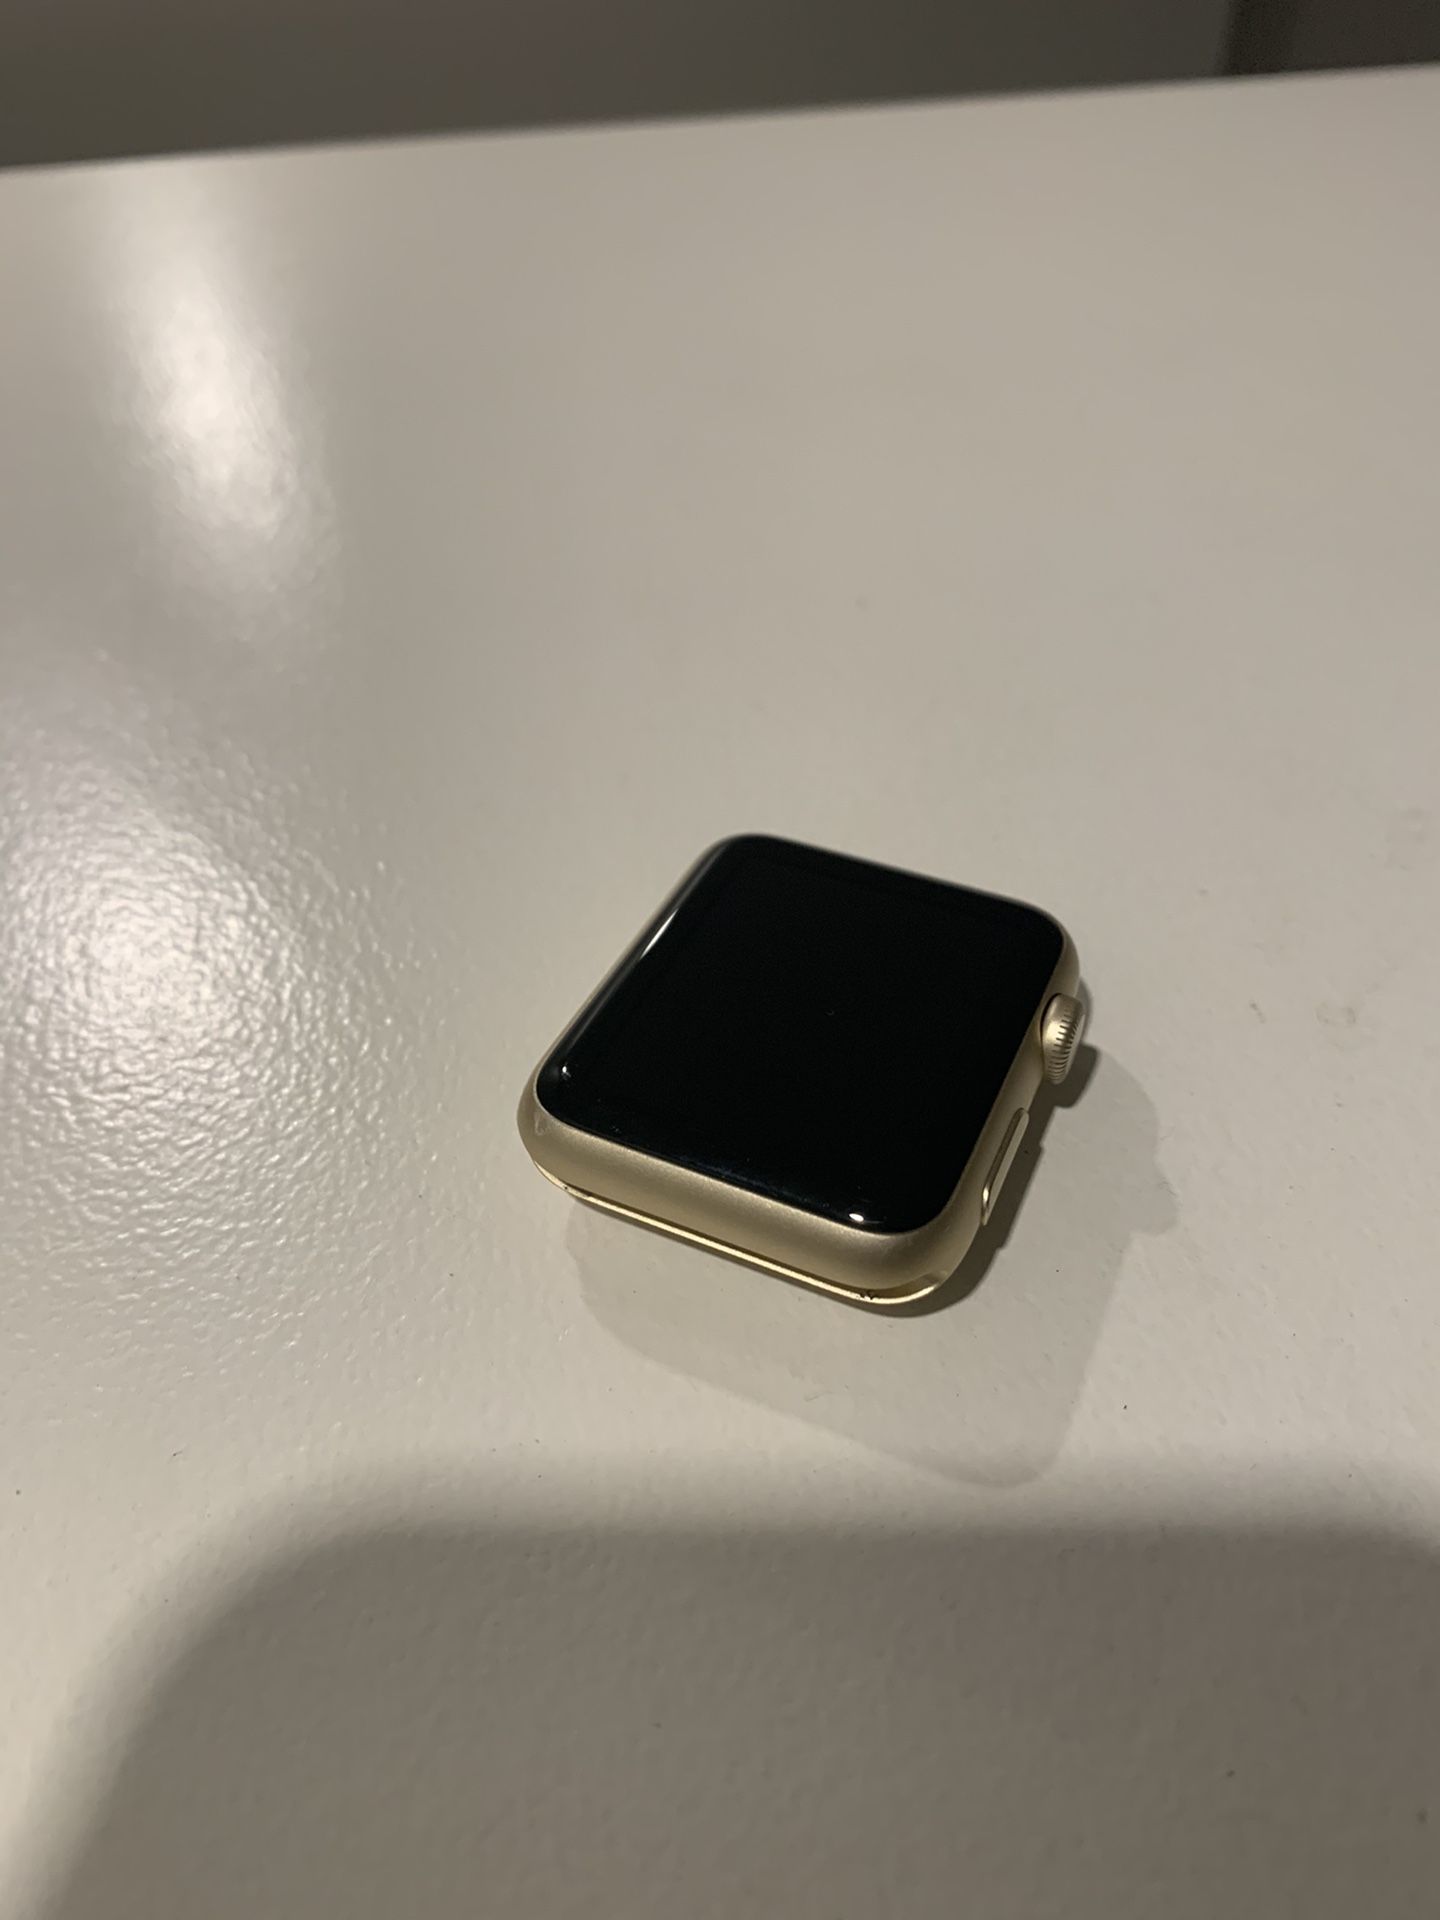 Apple Watch series 1 (Gold aluminum)